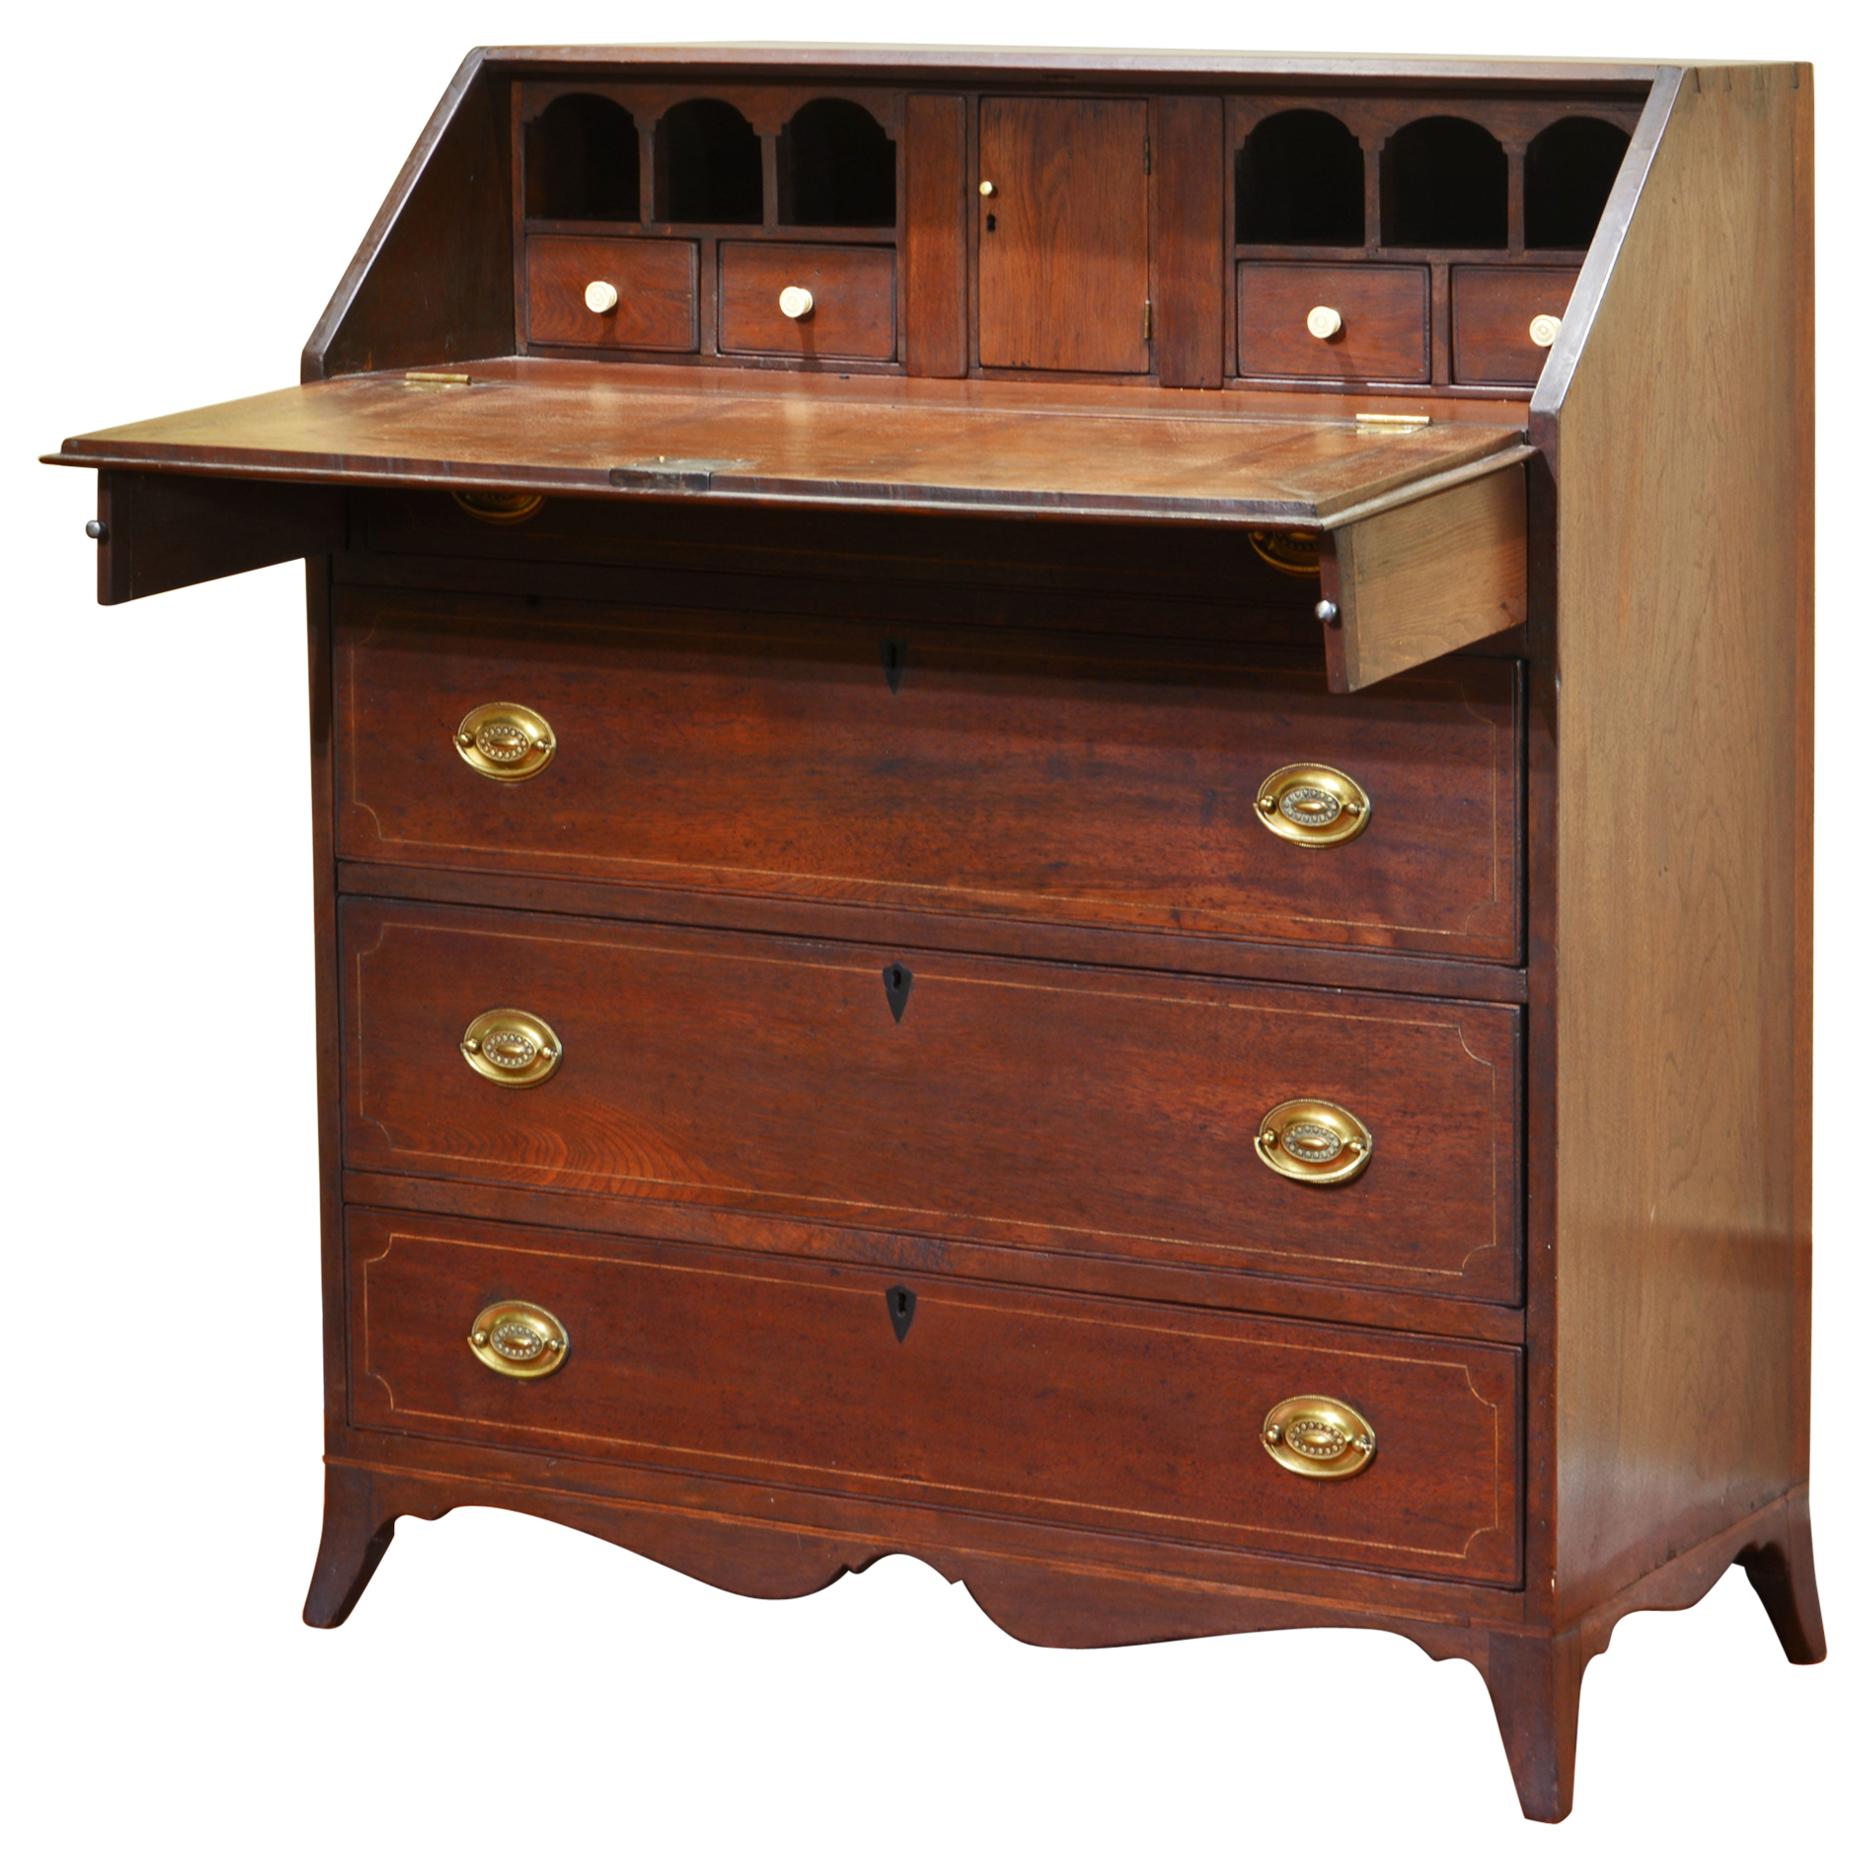 Southern Federal Walnut Slant Front Desk, Piedmont Region Virginia 1800-1820